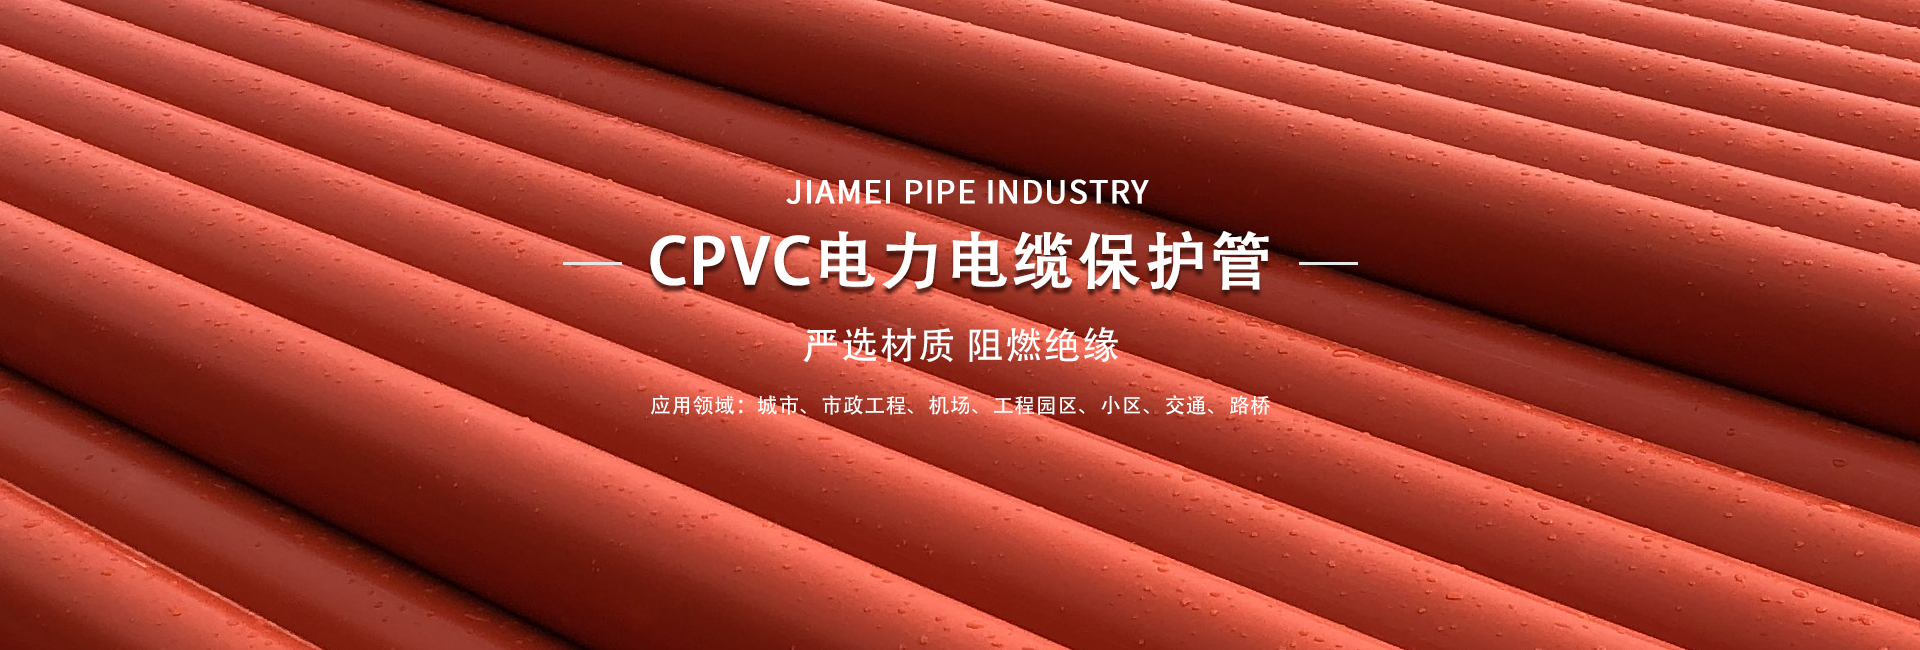 cpvc电力管的优点是什么?